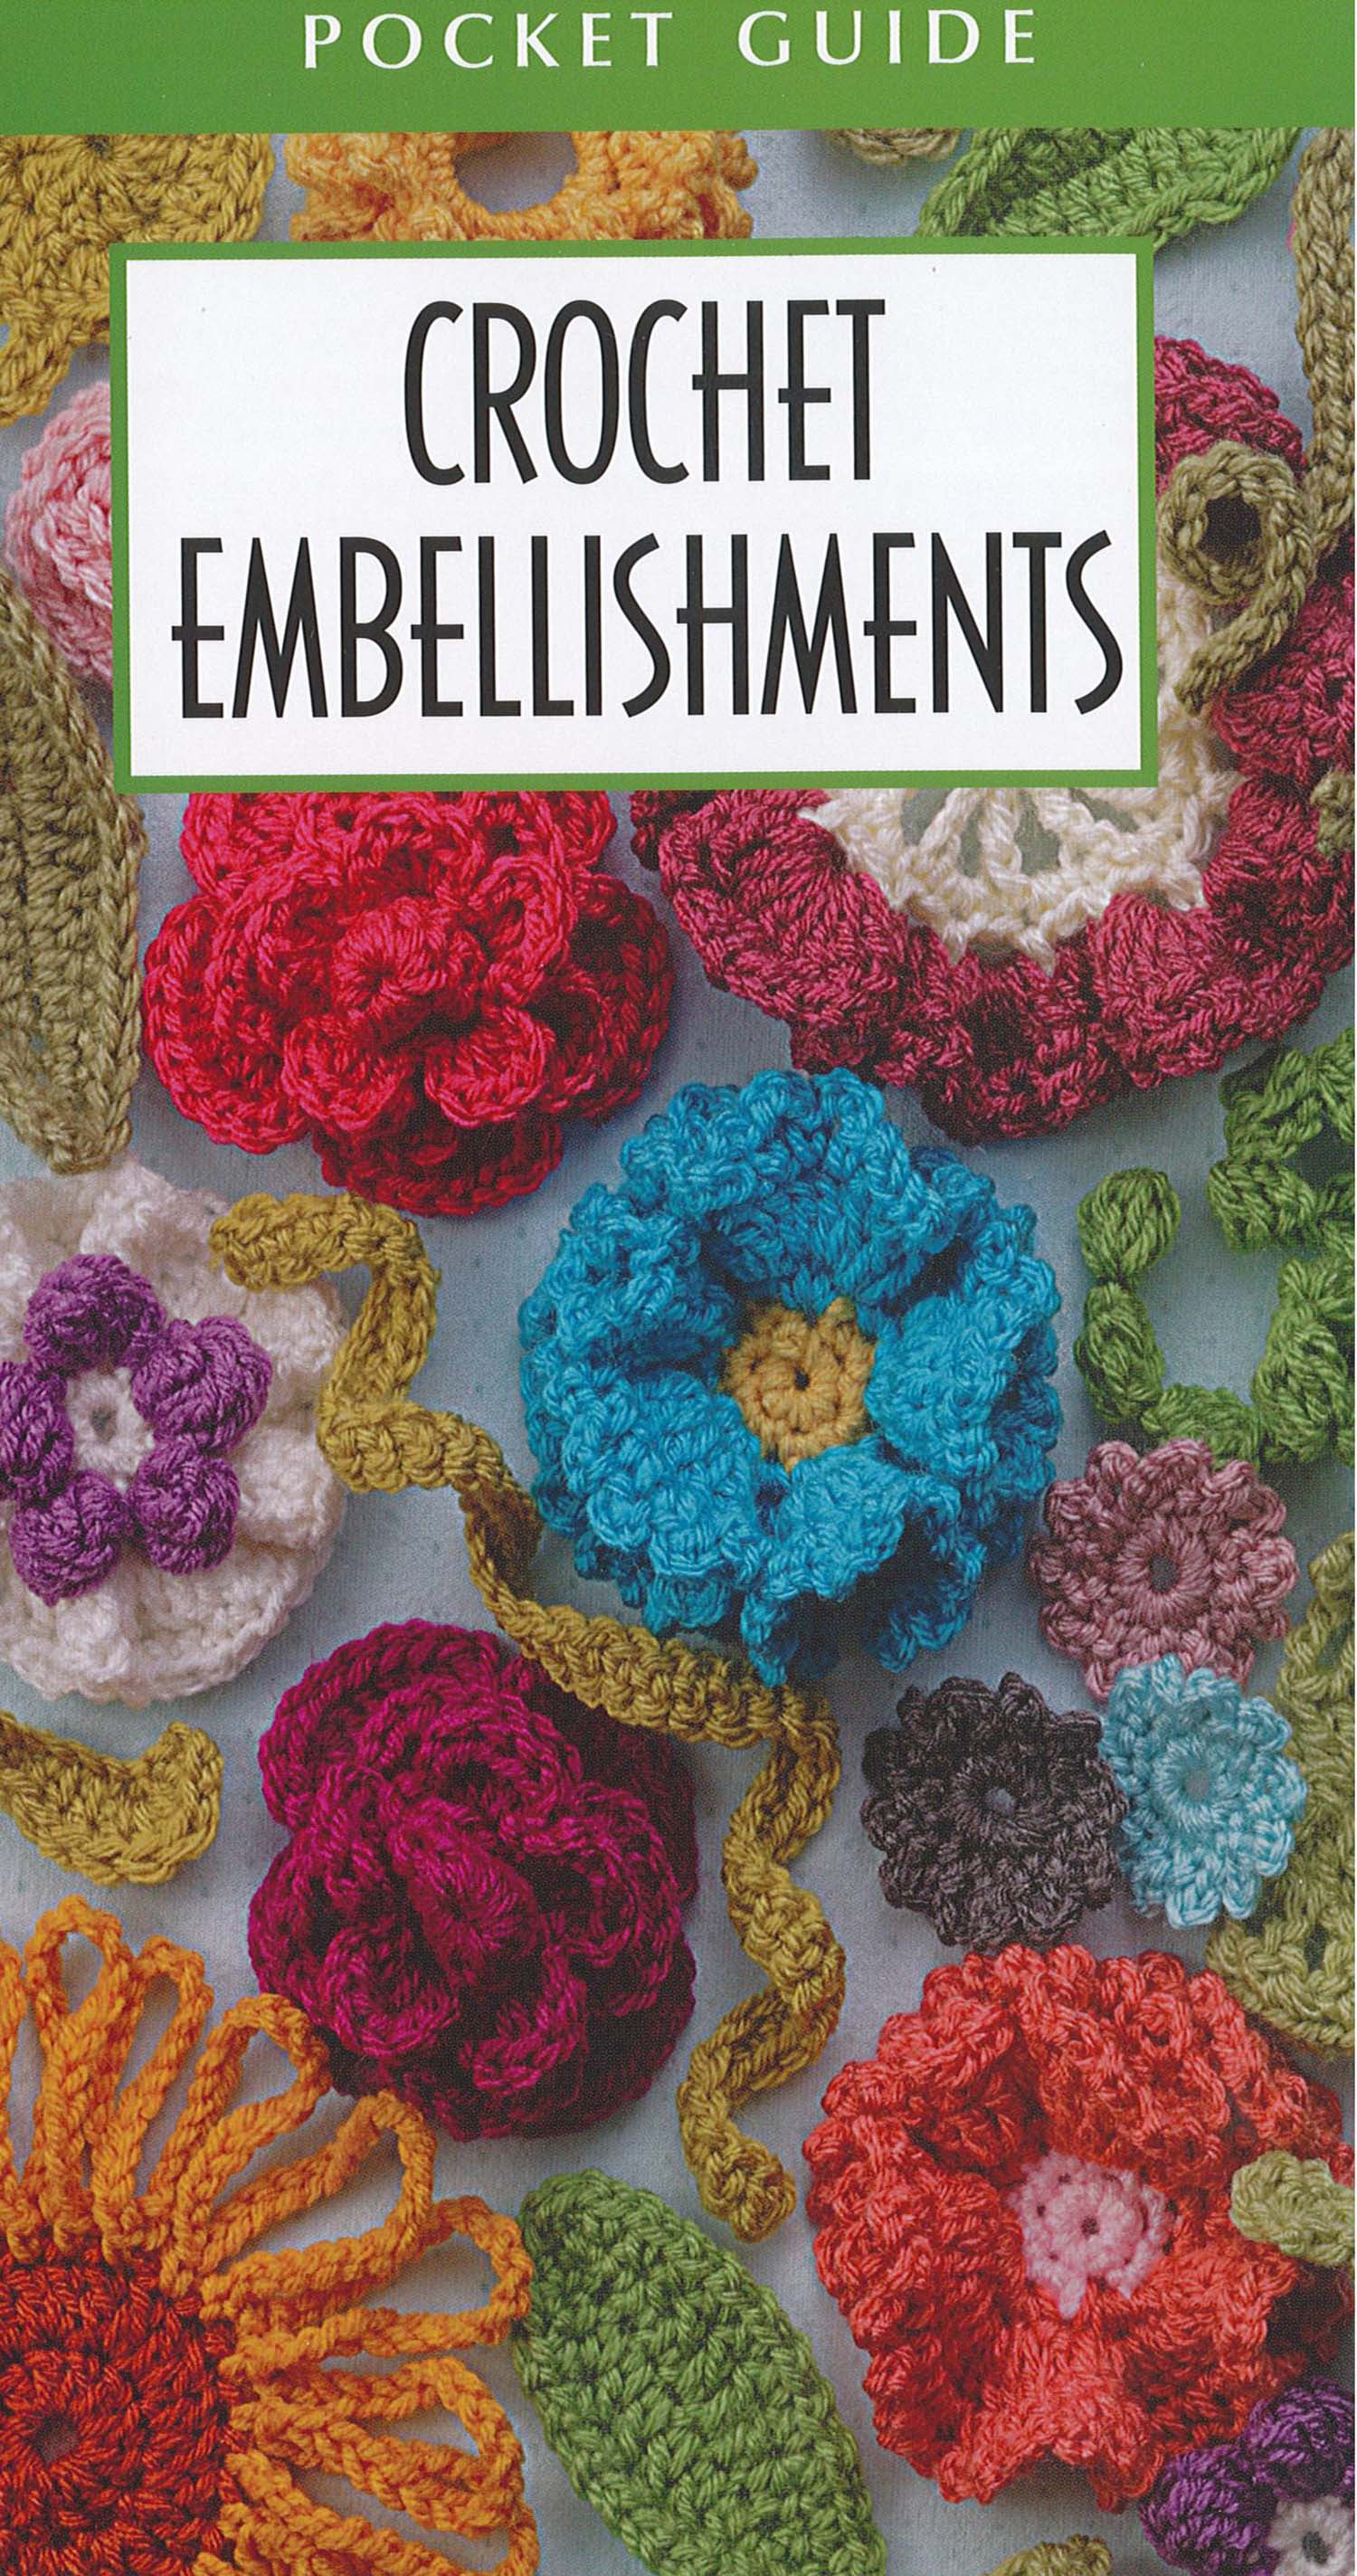 Leisure Arts Crochet Made Easy Crochet Book 